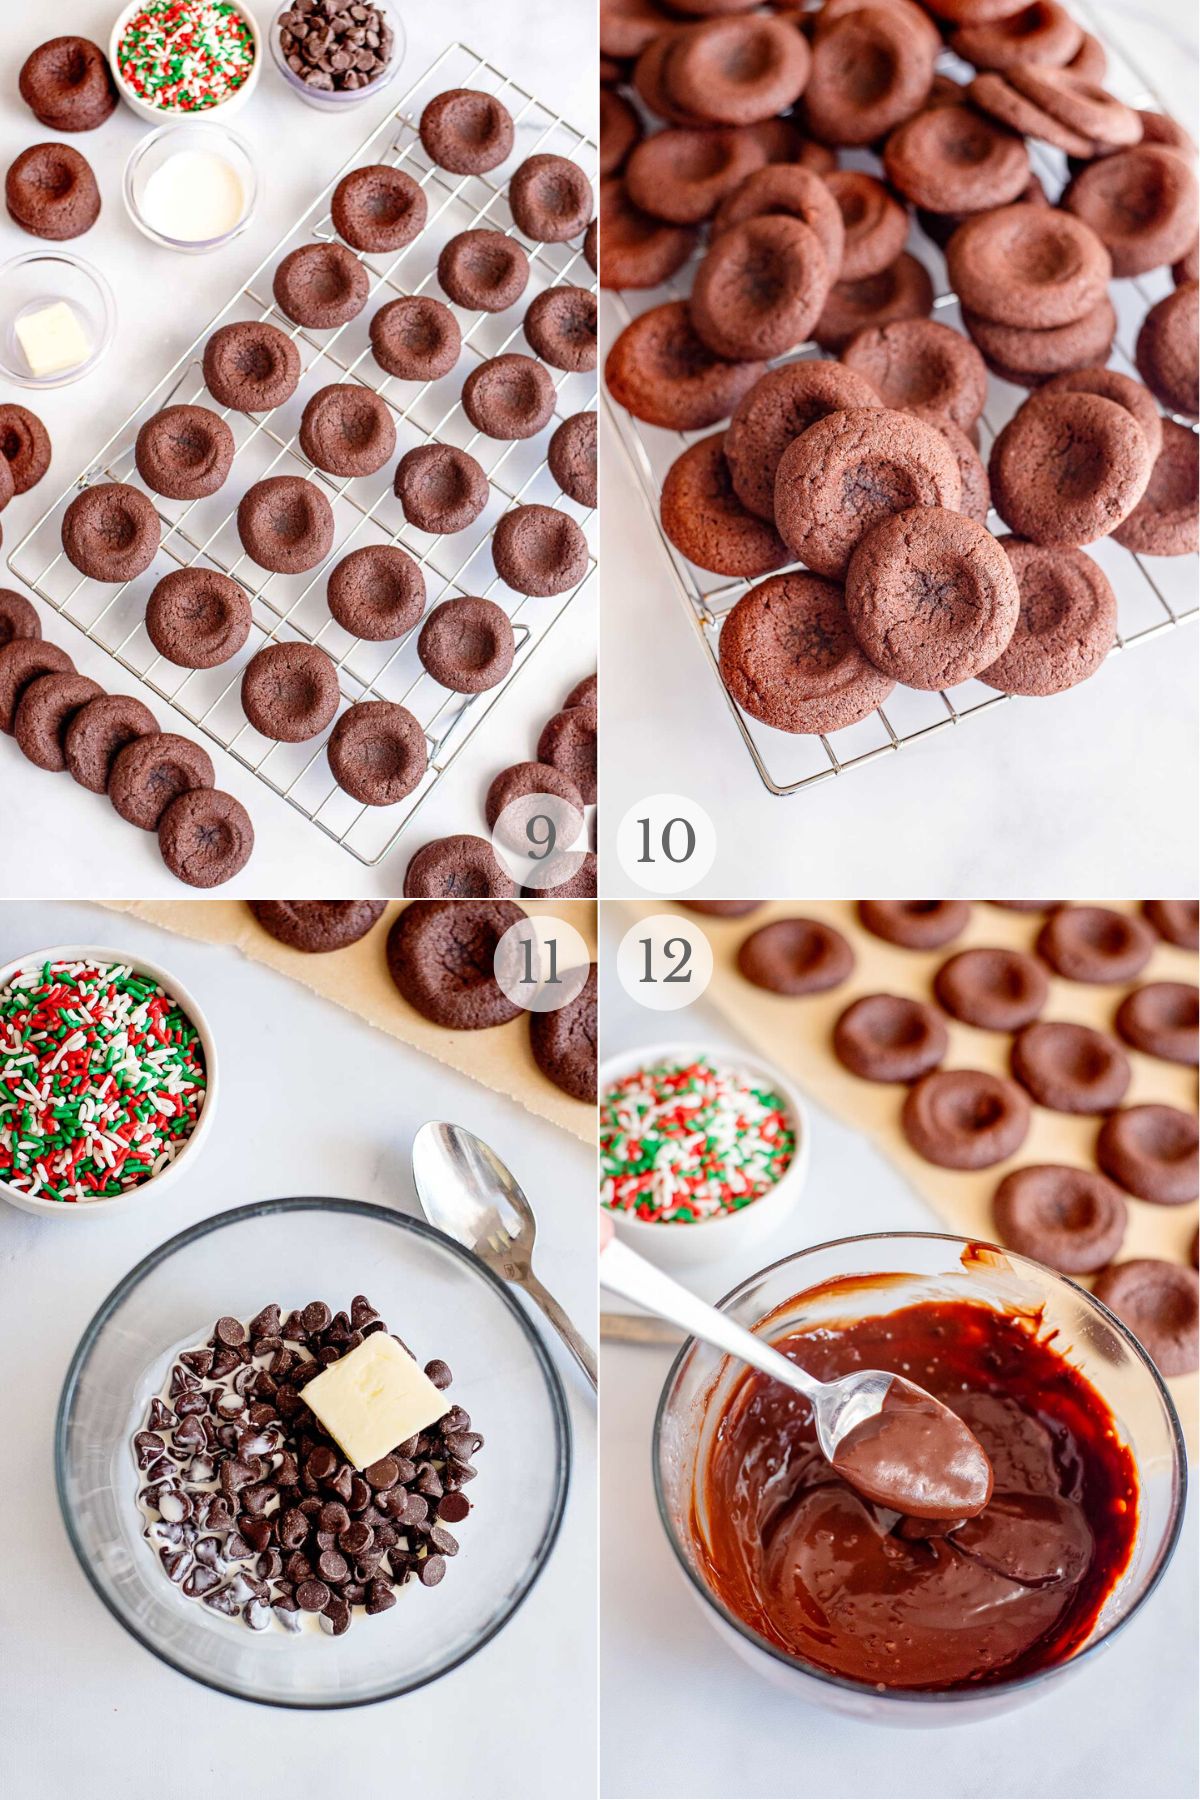 chocolate thumbprint cookies recipe steps 9-12.